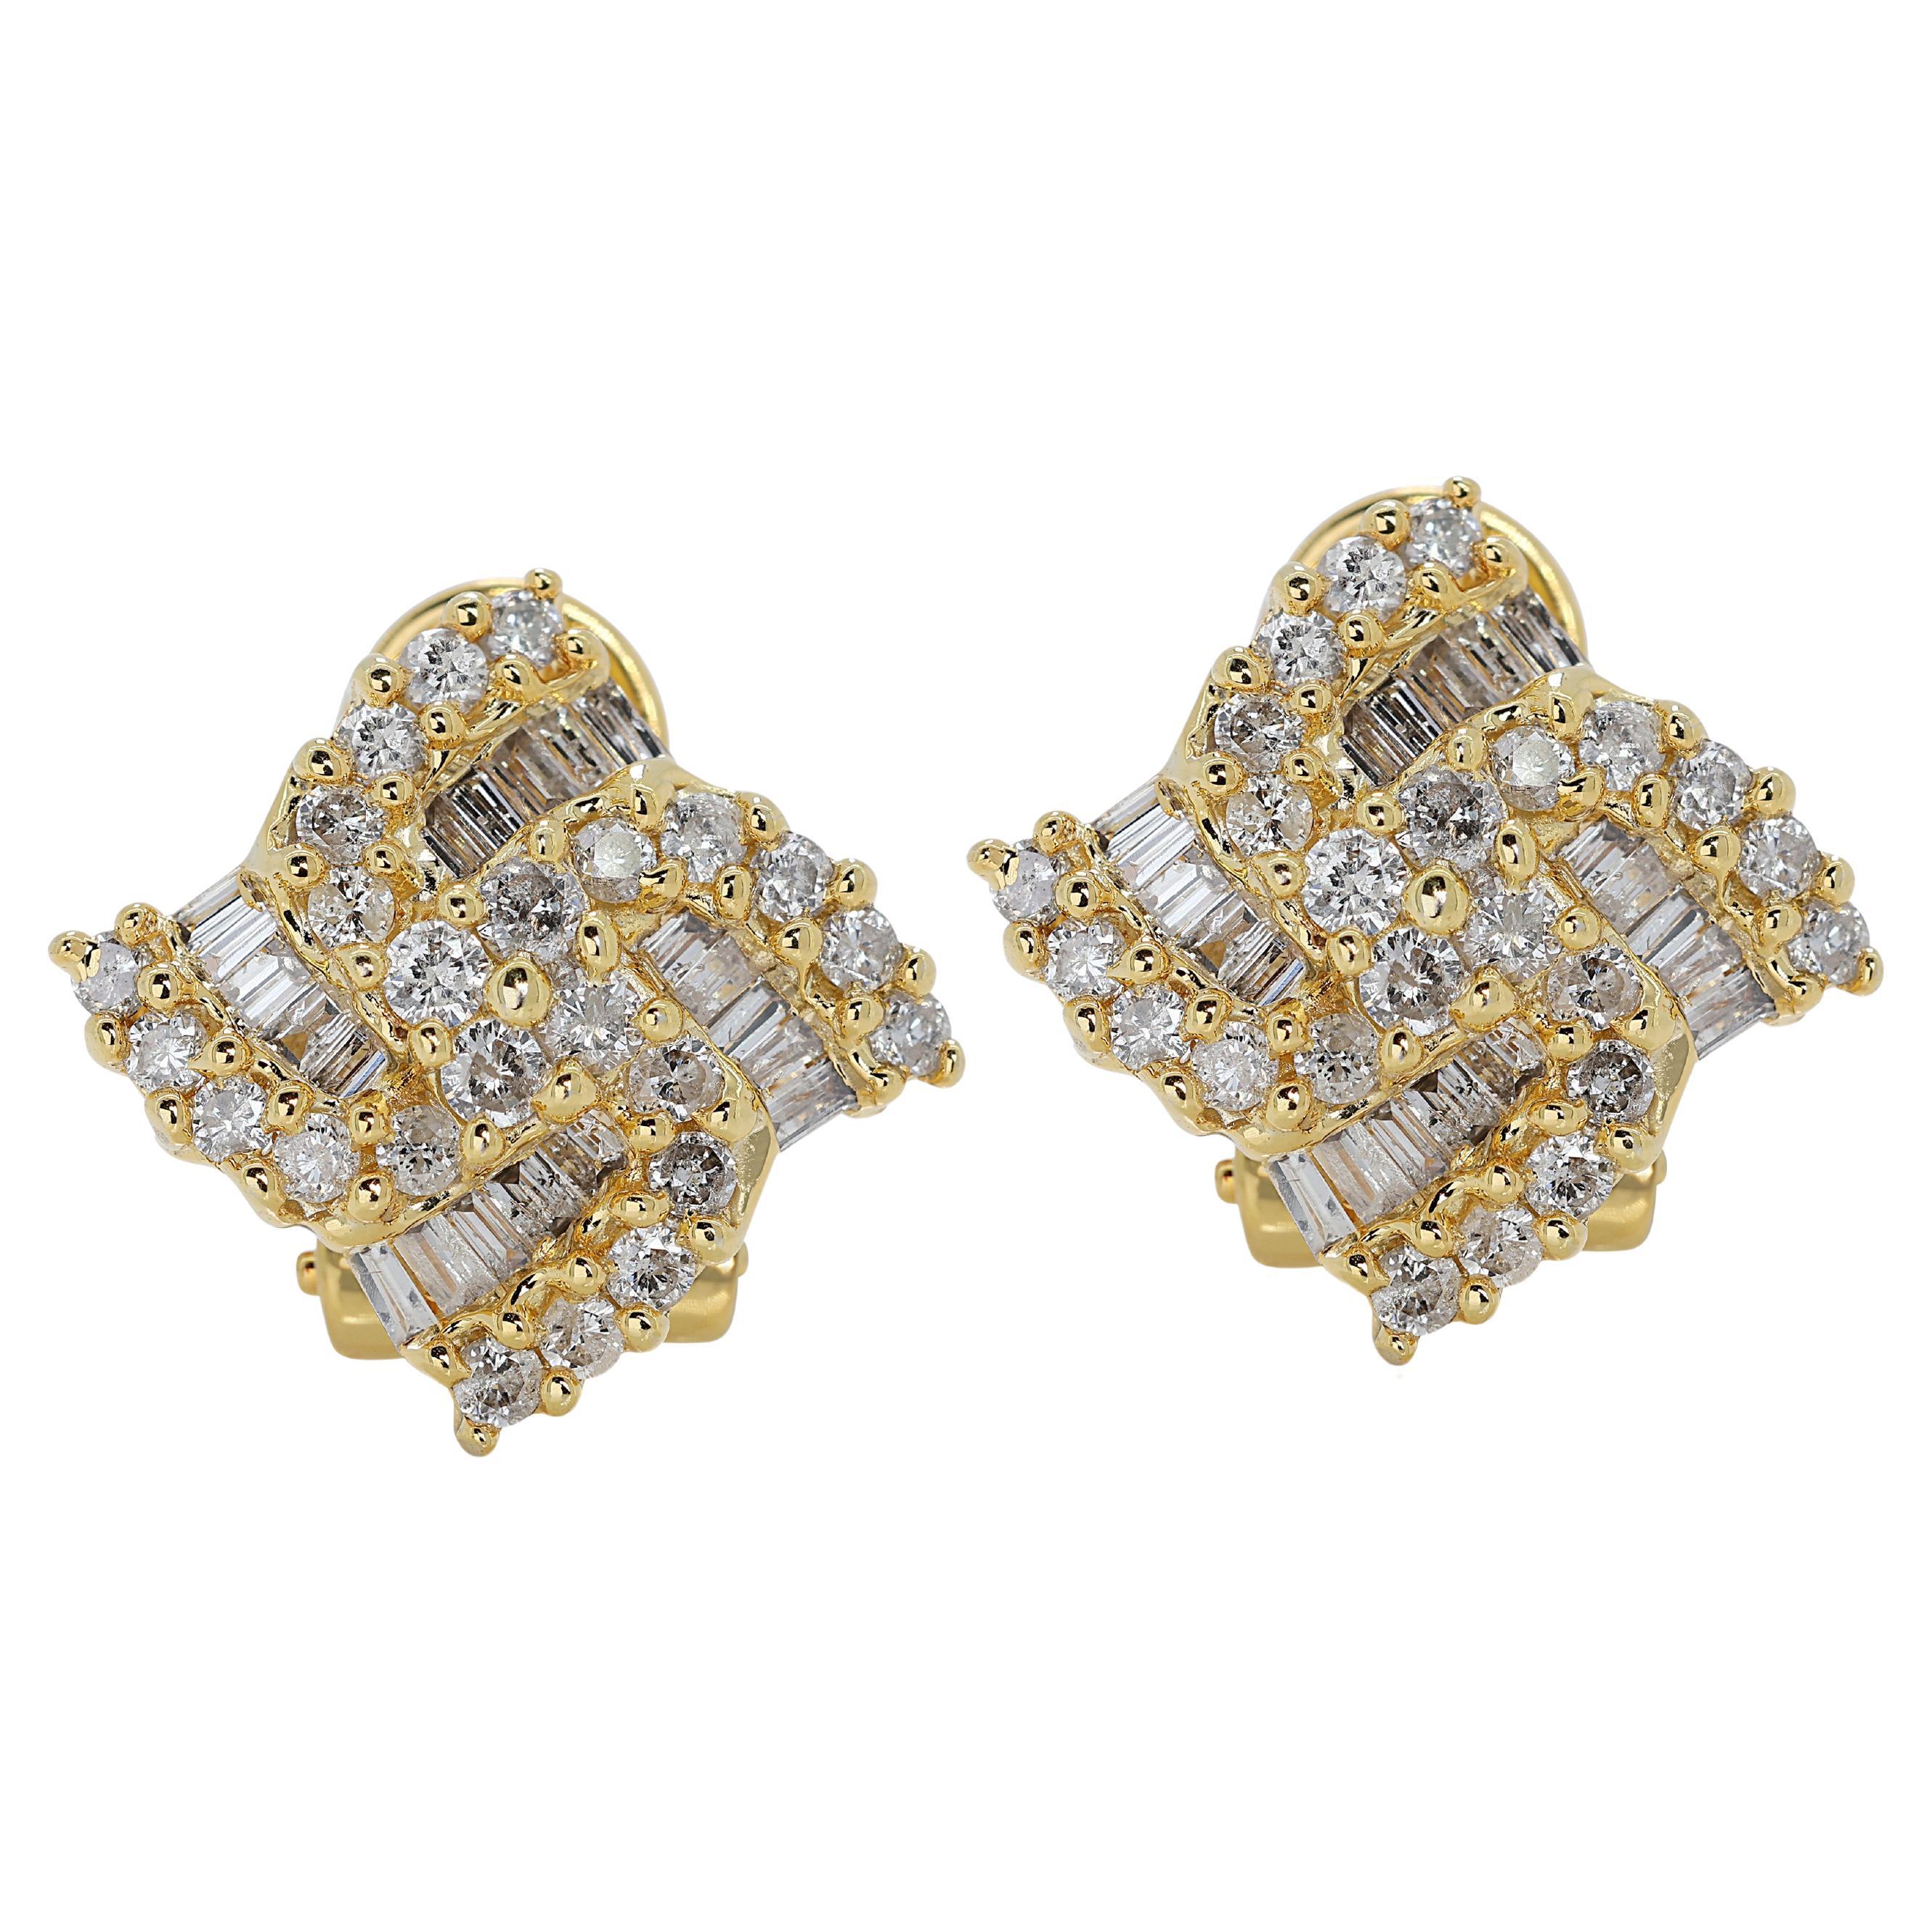 Elegant 0.84ct Diamonds Earrings in 18K Yellow Gold